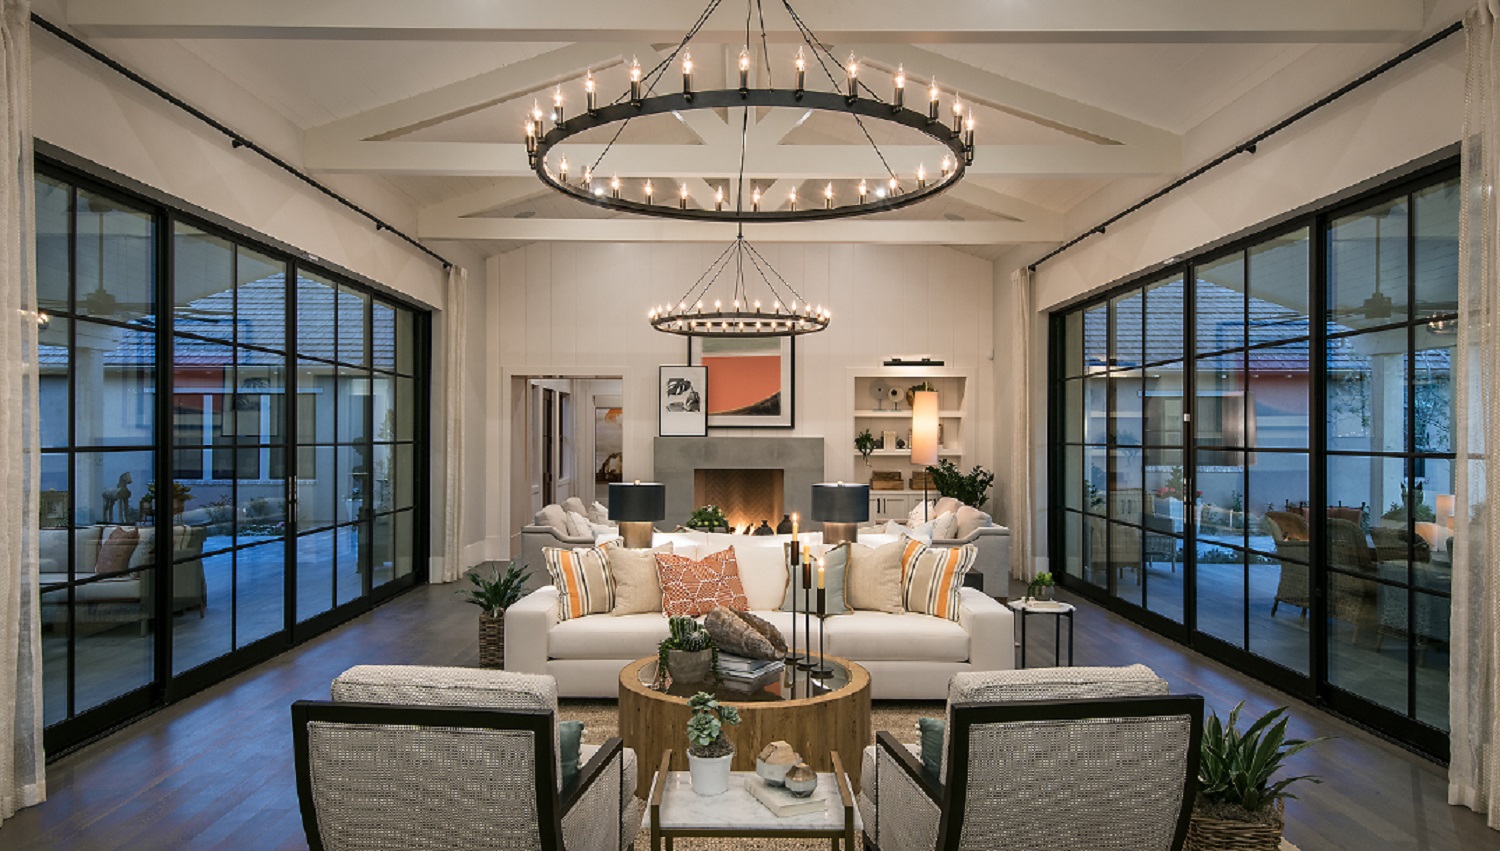 Photo of White Horse luxury home floorplan in Scottsdale, Arizona.